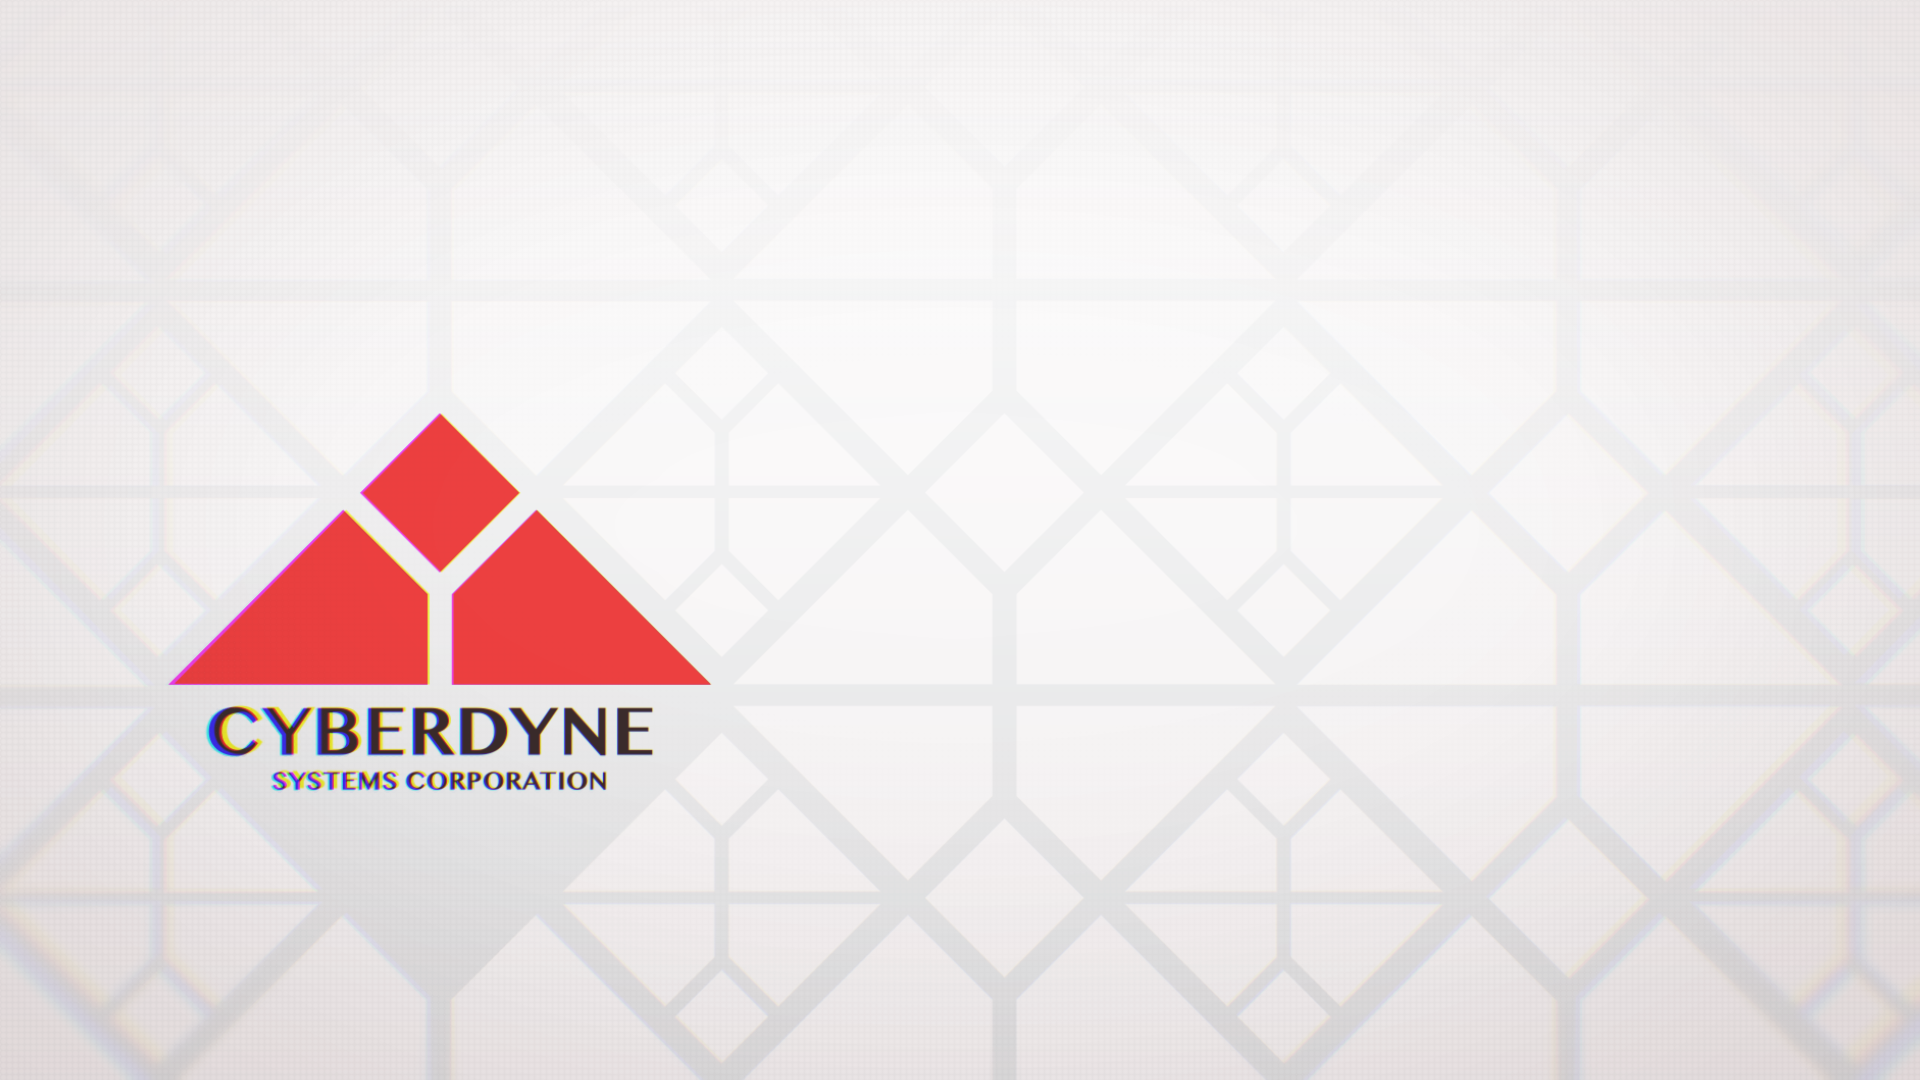 Cyberdyne Systems logo I made. [OC]